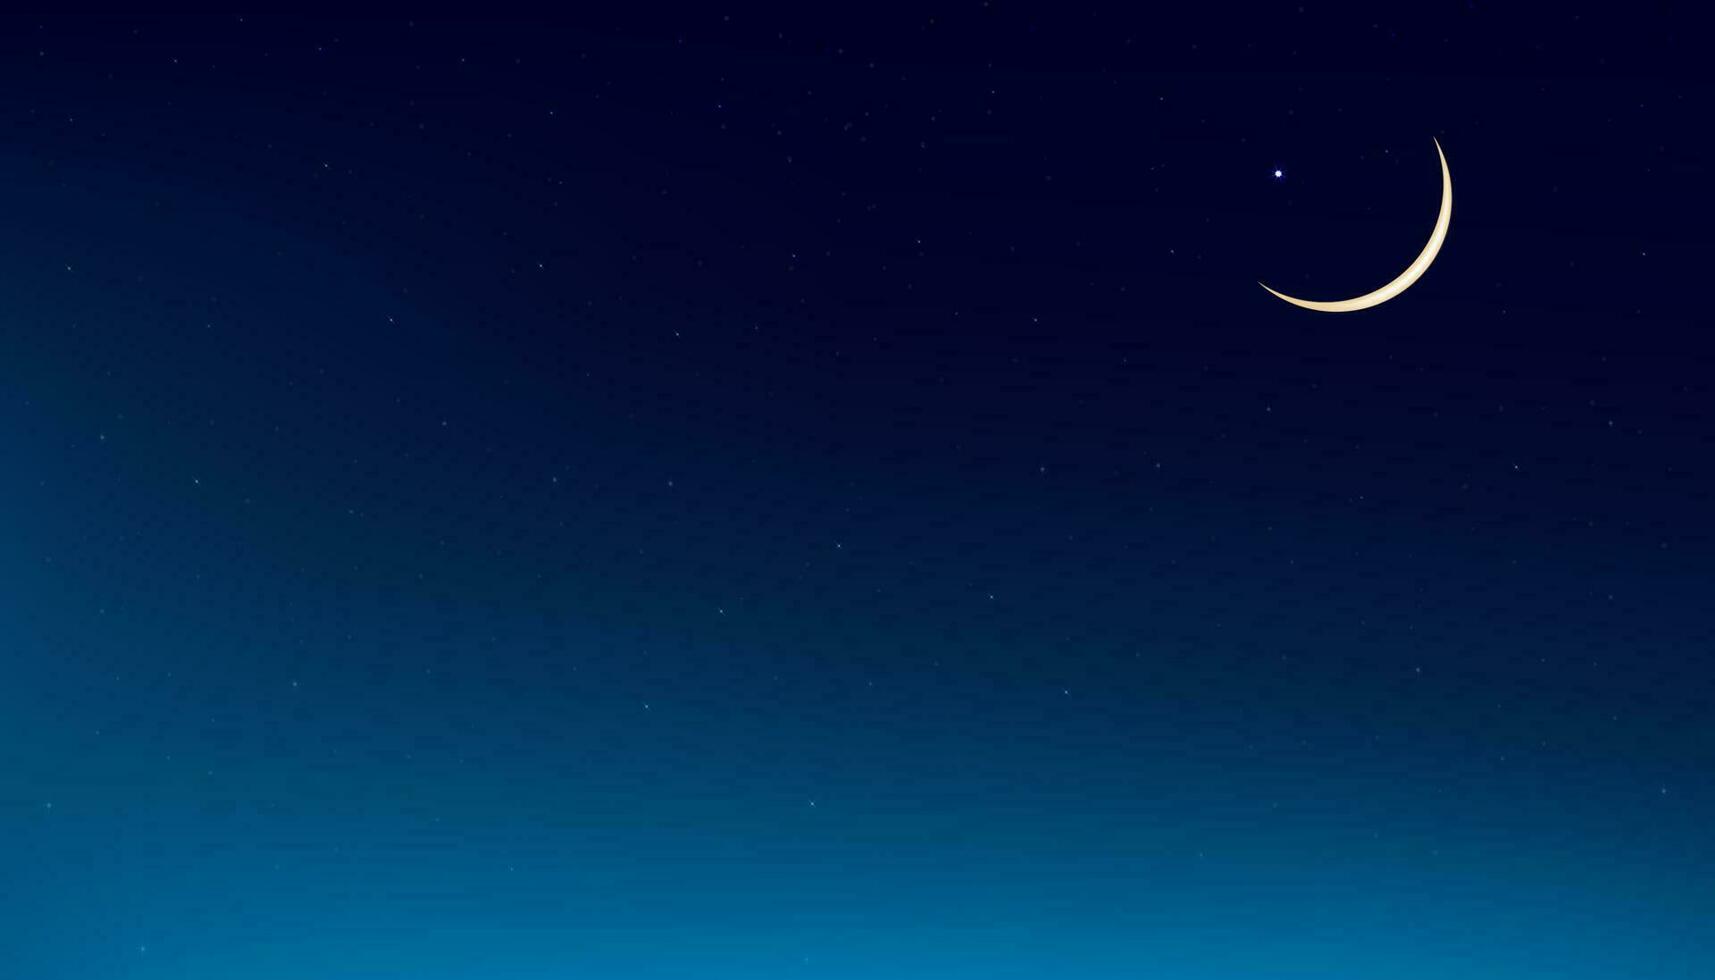 eid al adha mubarak carta, mezzaluna Luna su blu crepuscolo cielo nel sera,orizzonte tramonto dopo tramonto, tramonto cielo con copia spazio, vettore bandiera simbolo islamico religione per eid al fitr, Ramadan kareem